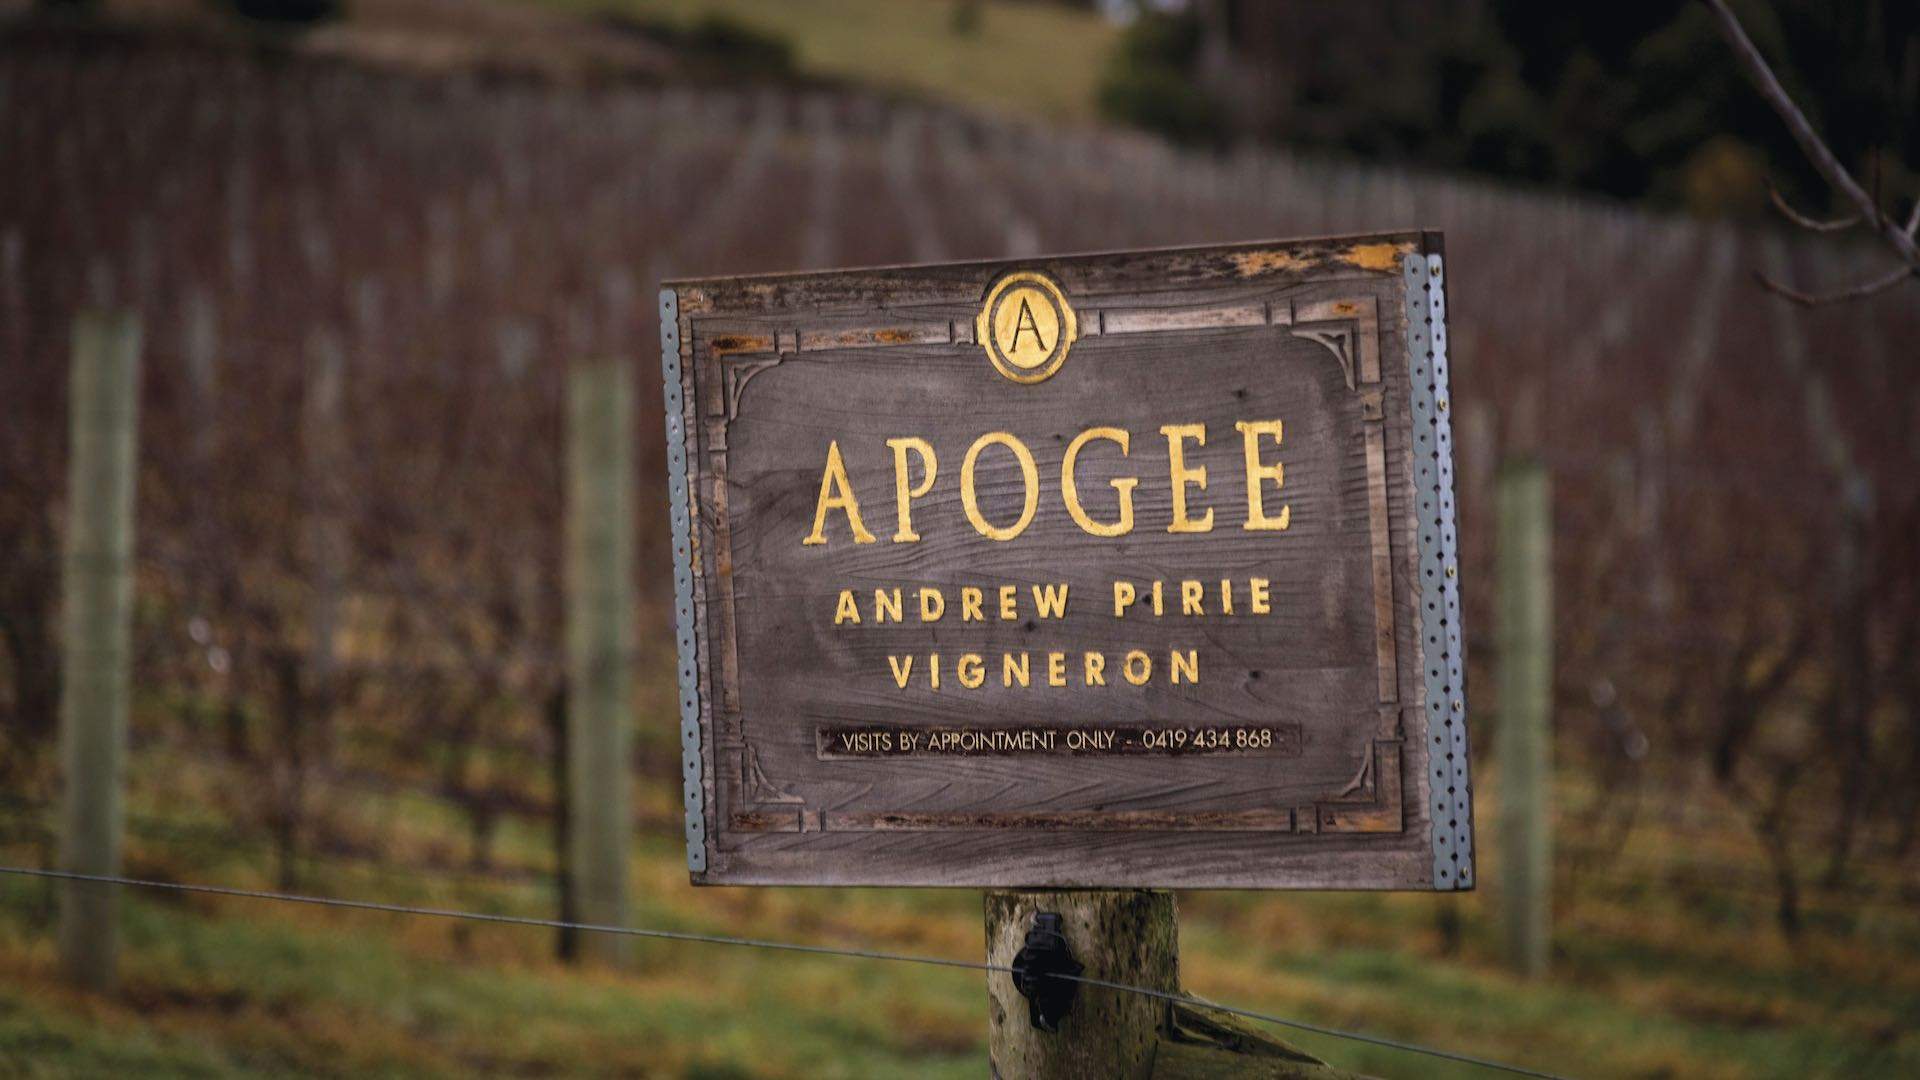 Apogee Wines in Tasmania